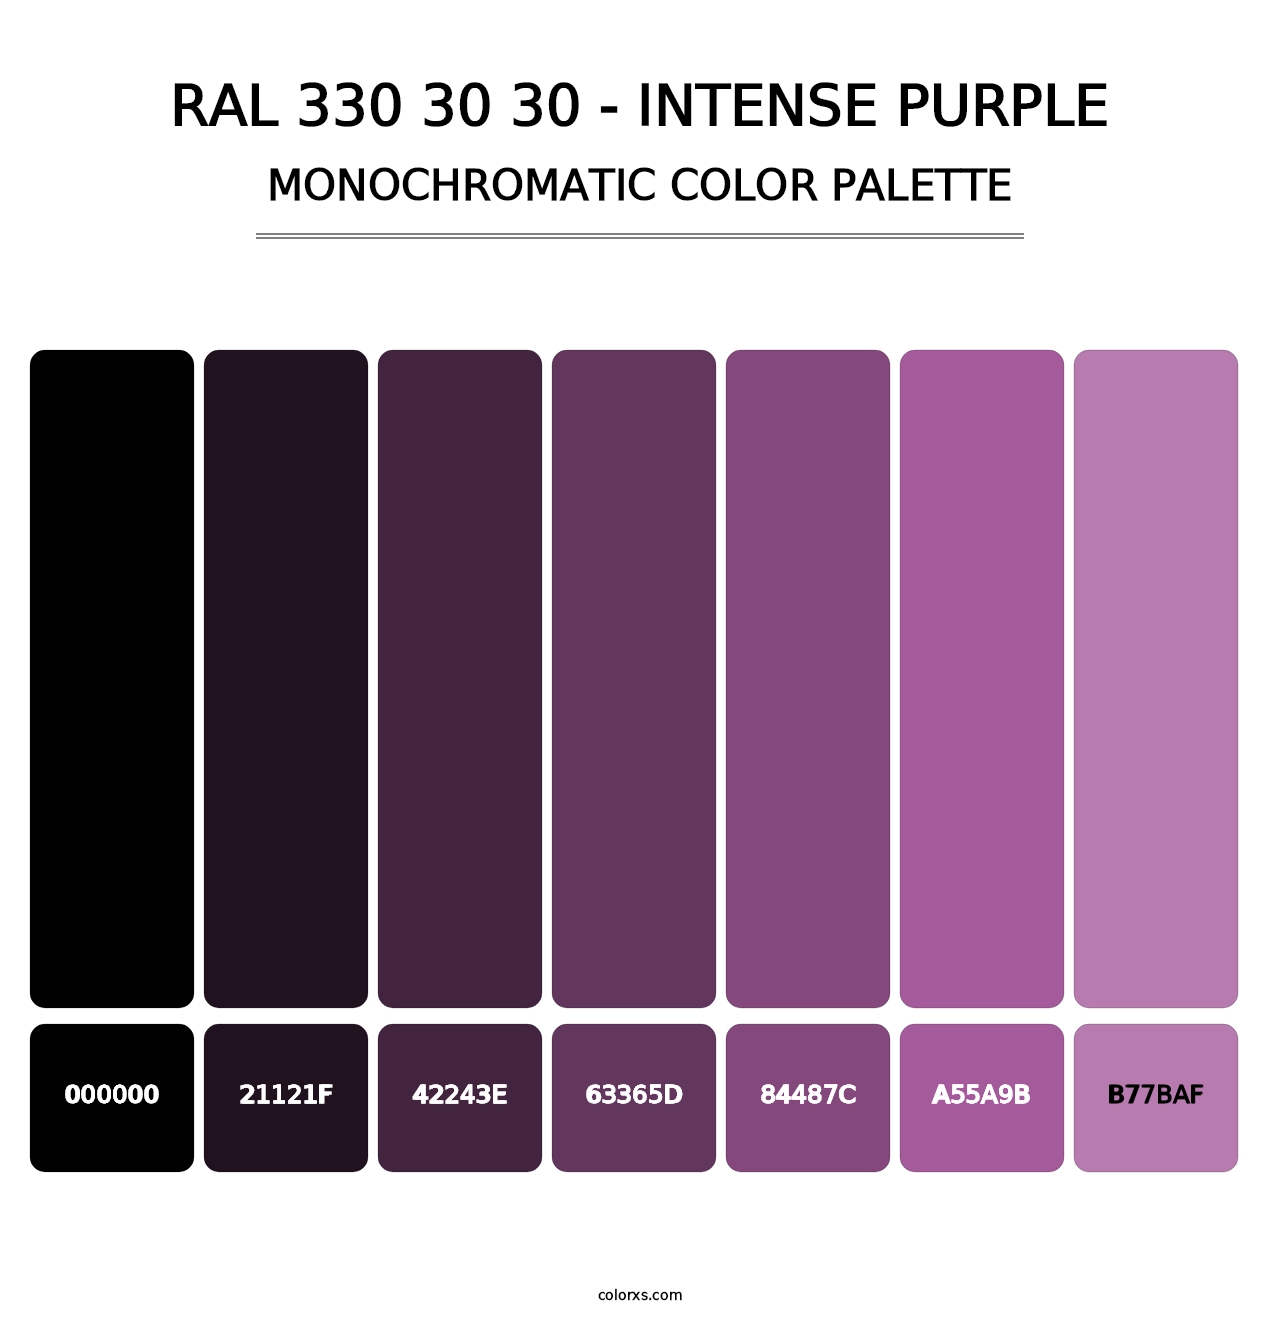 RAL 330 30 30 - Intense Purple - Monochromatic Color Palette